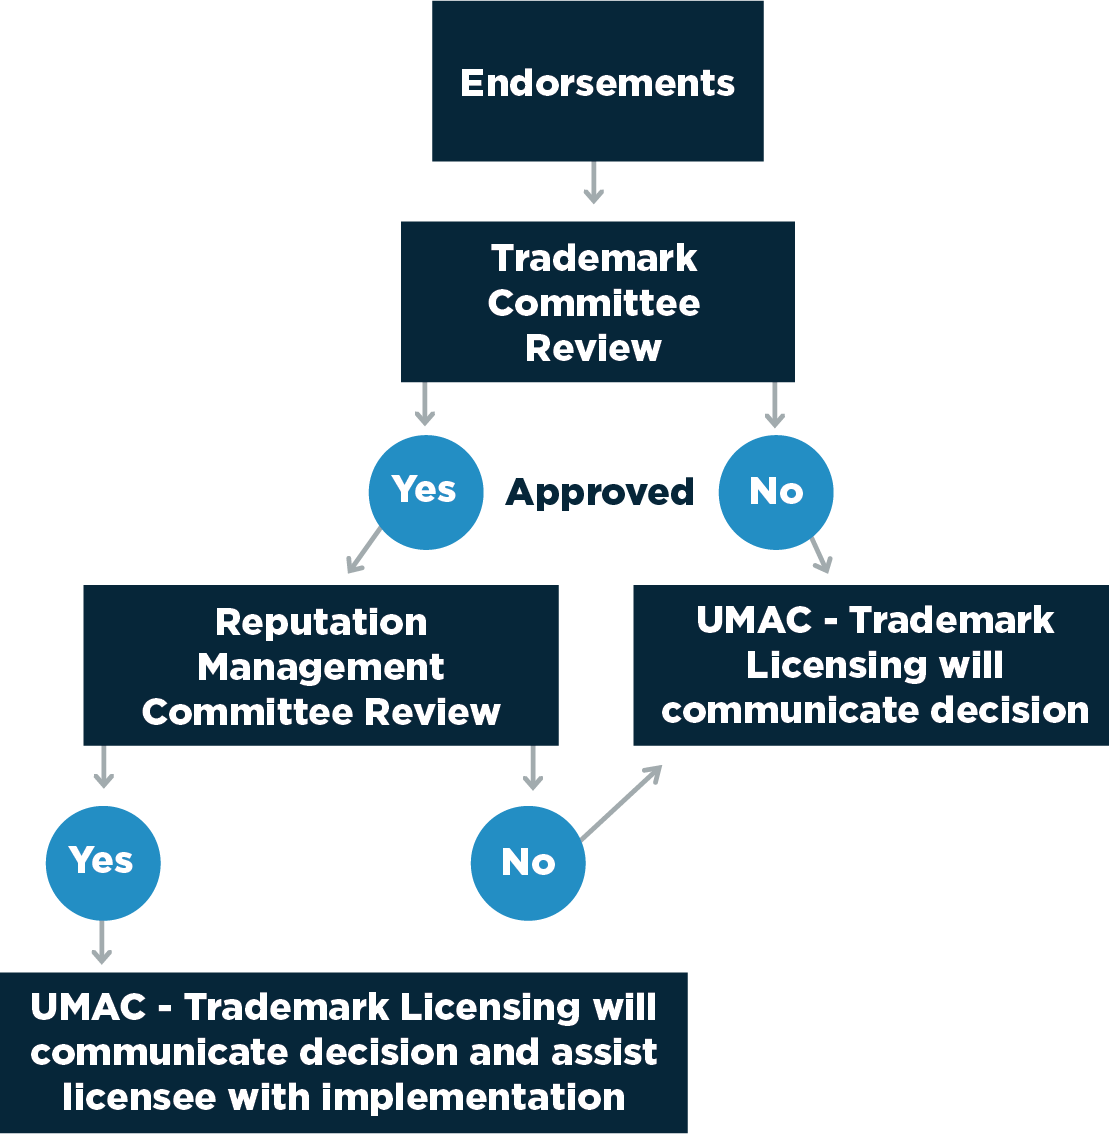 endorsements follow the trademark review process flow chart